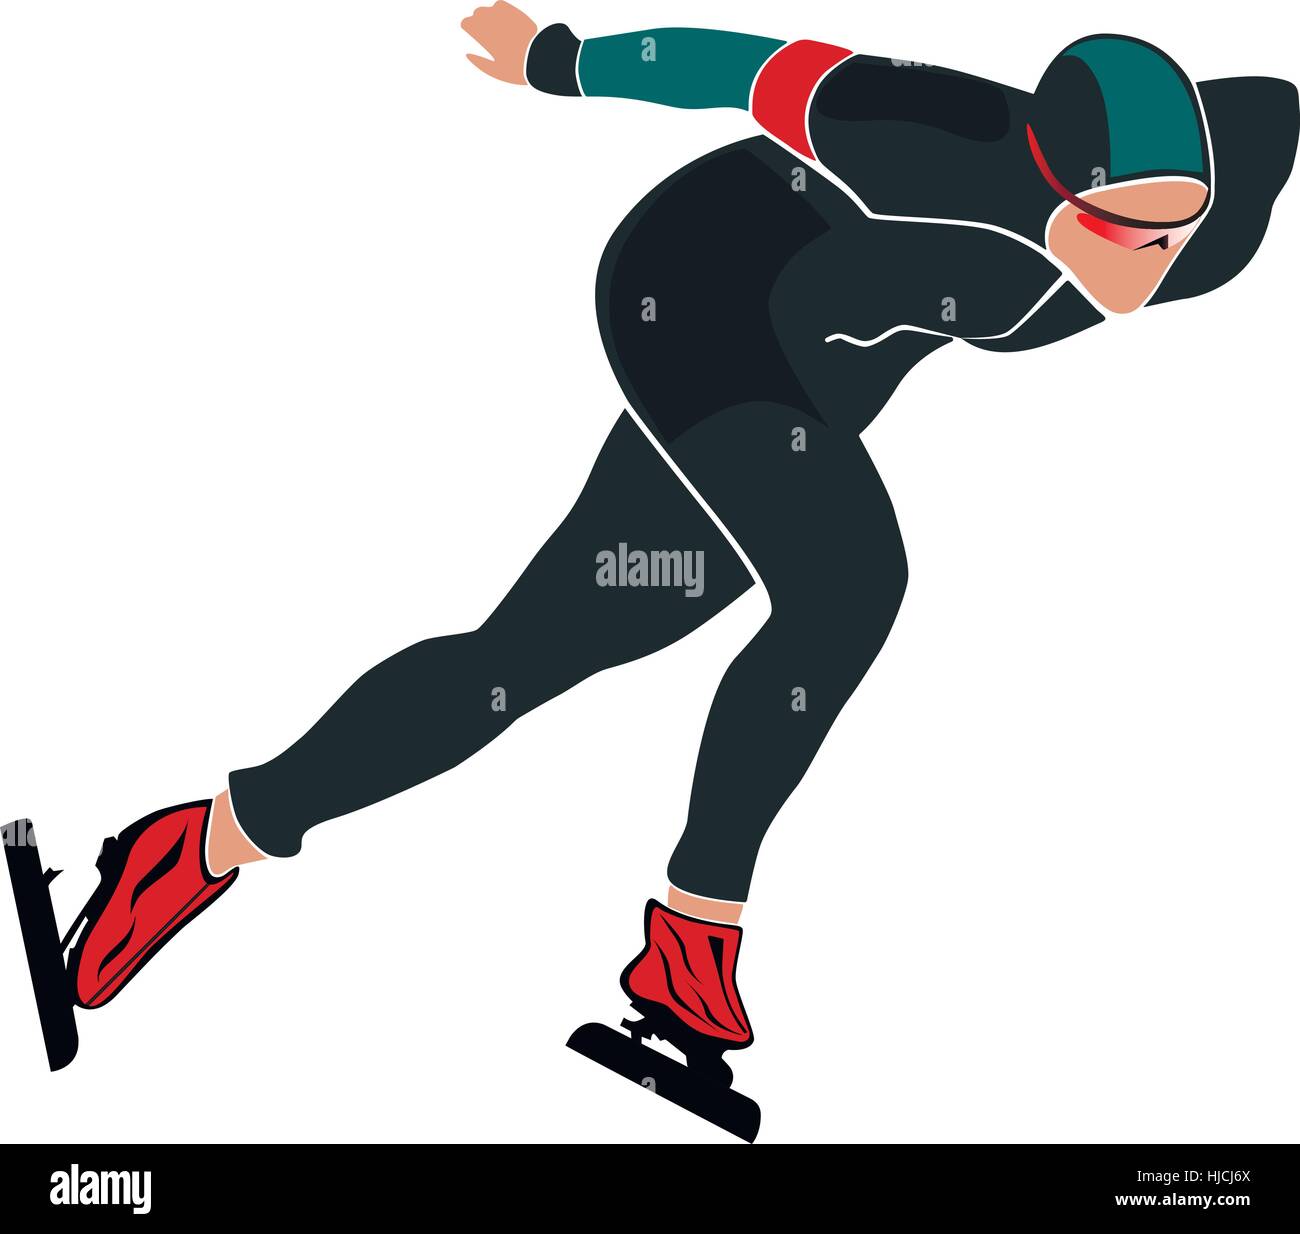 Athlet Eisschnelllauf farbige Silhouette Vektor-illustration Stock Vektor